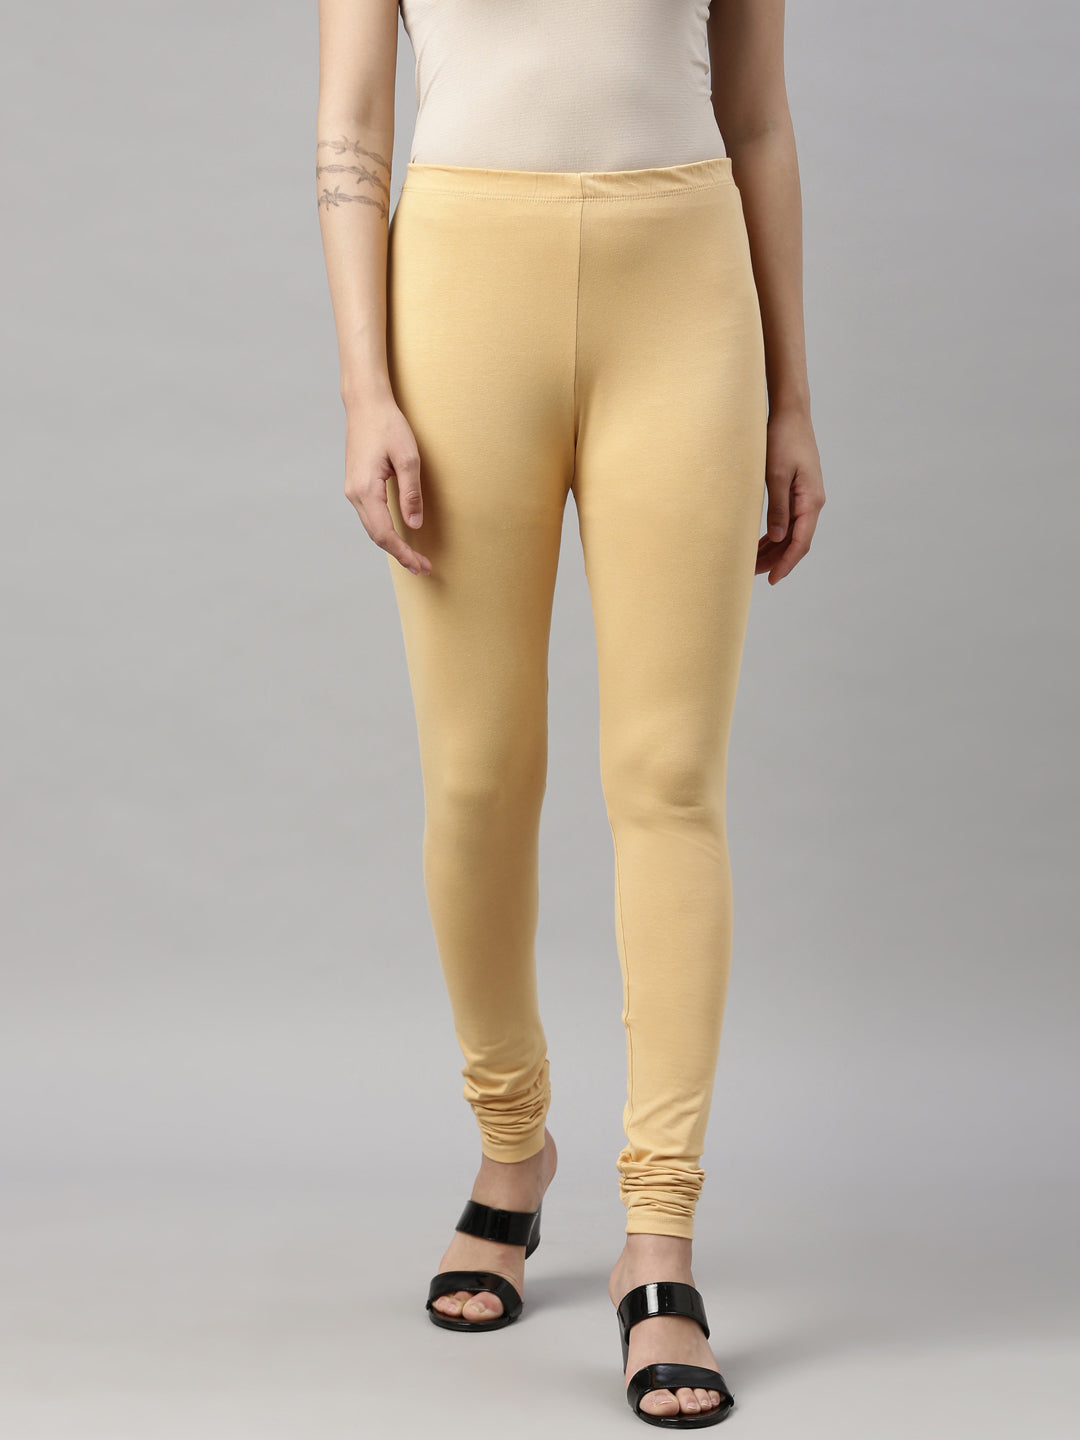 Curves Beauty Women's Stretch Fit Synthetic Leggings (chudileg-s-105_Silver  & Golden_S)